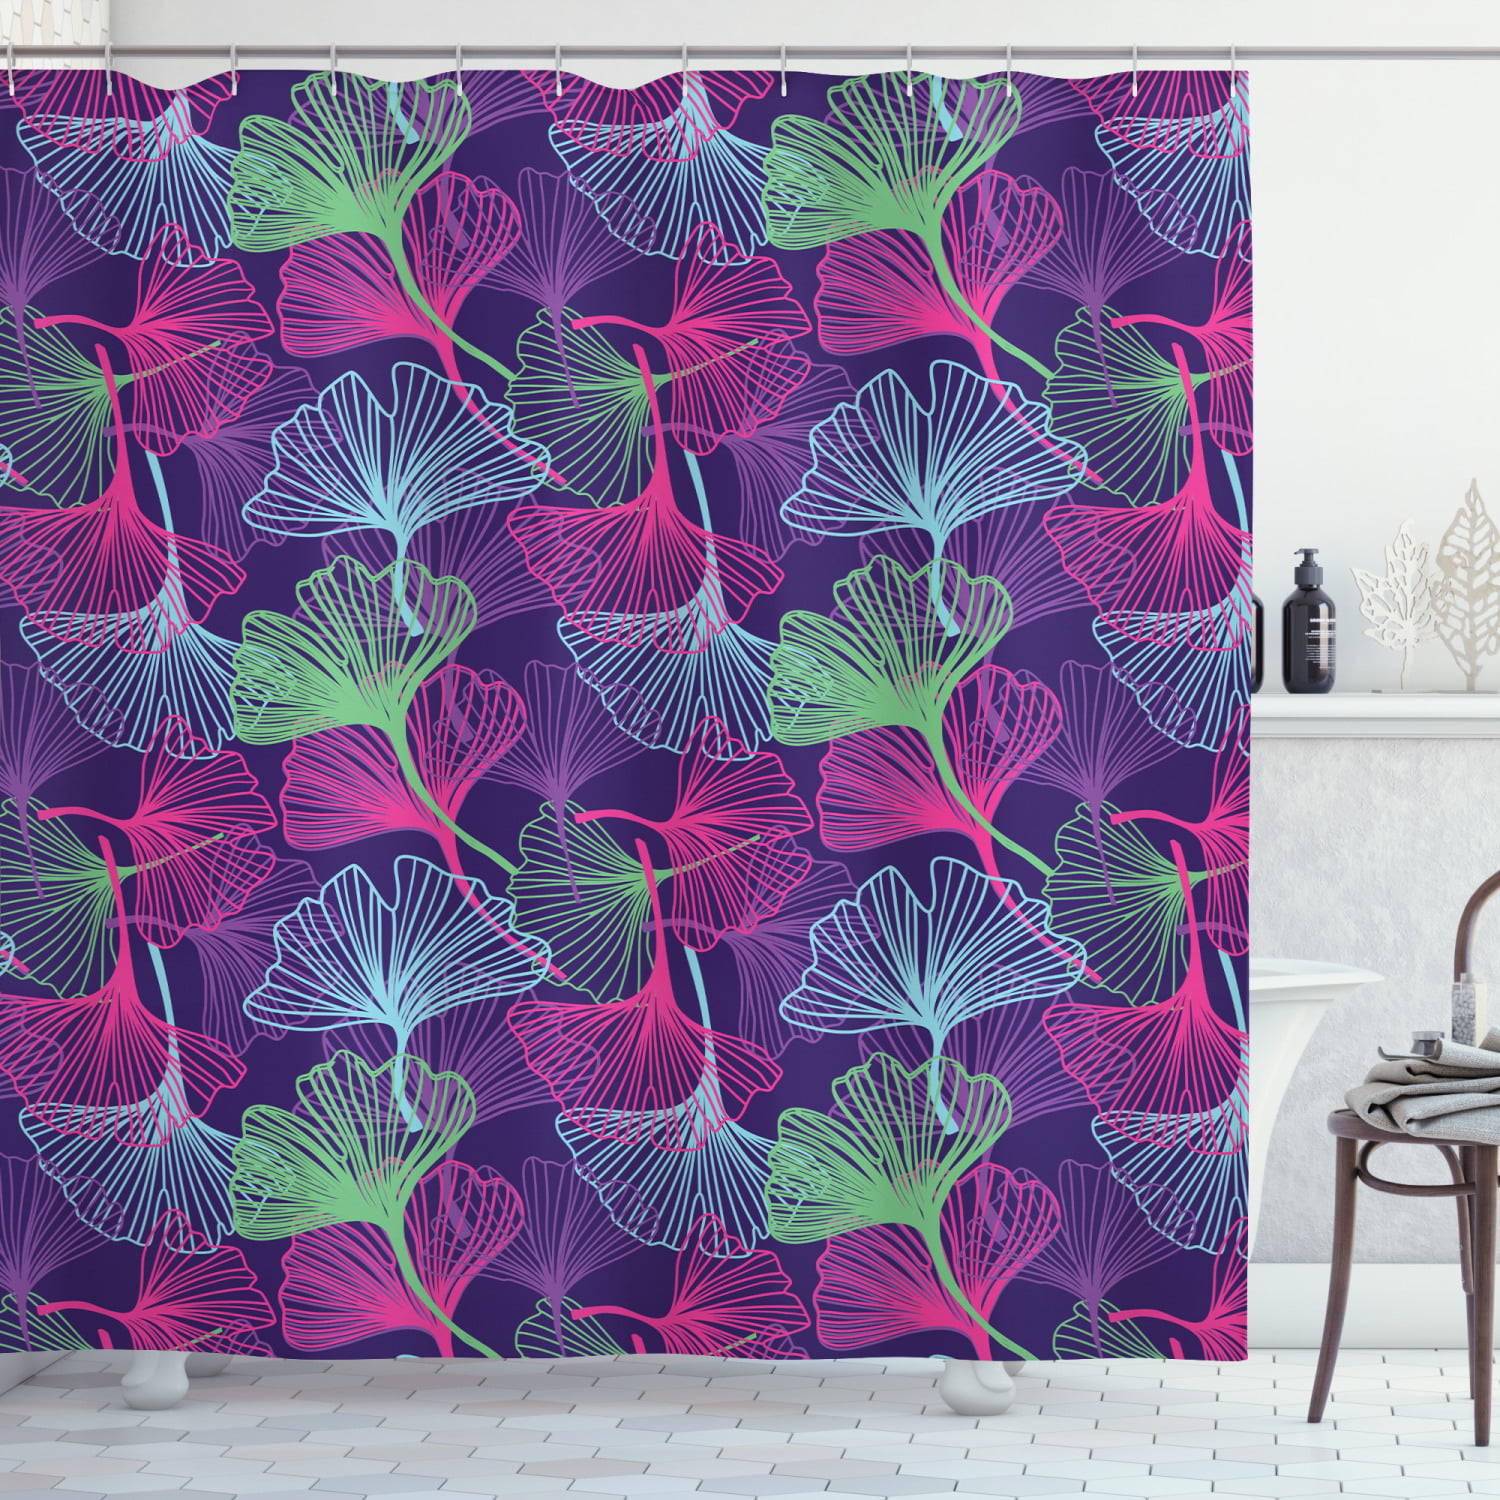 Exotic Mandala Fantasy Meditation Mushroom Waterproof Fabric Shower Curtain Set 